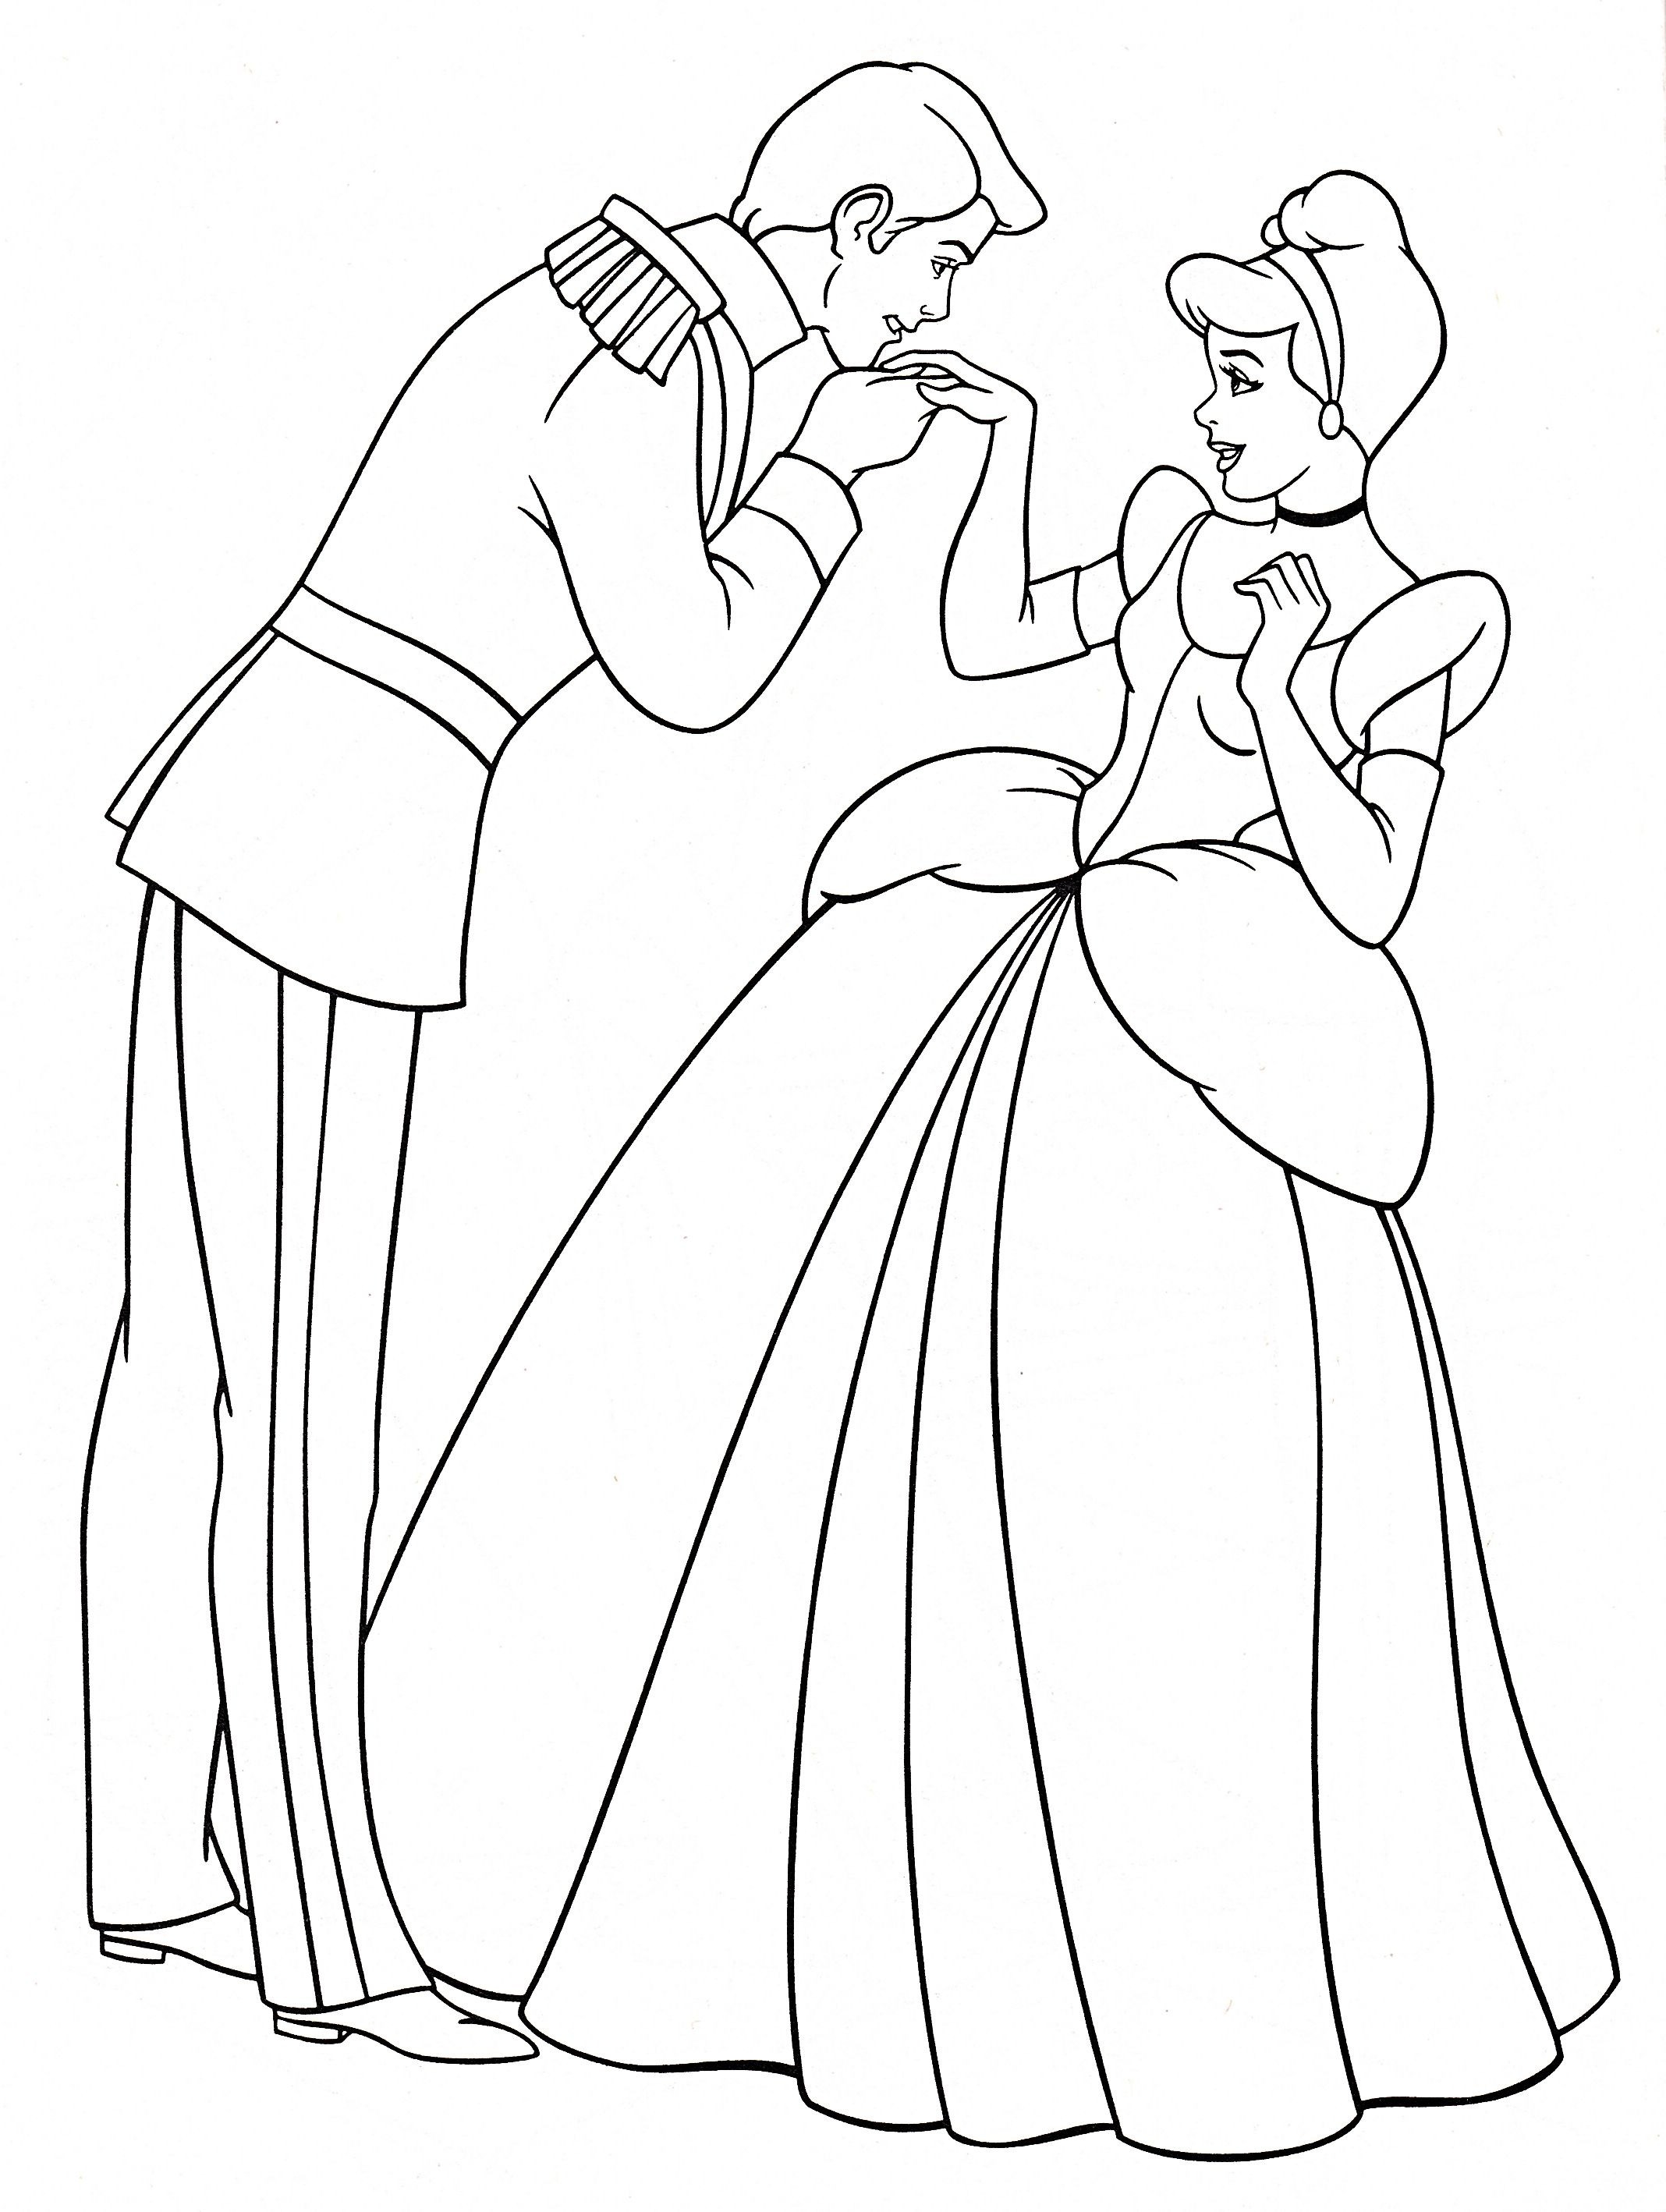 Cinderella Coloring Pages Fresh Walt Disney Coloring Pages Prince Charming & Princess Cinderella